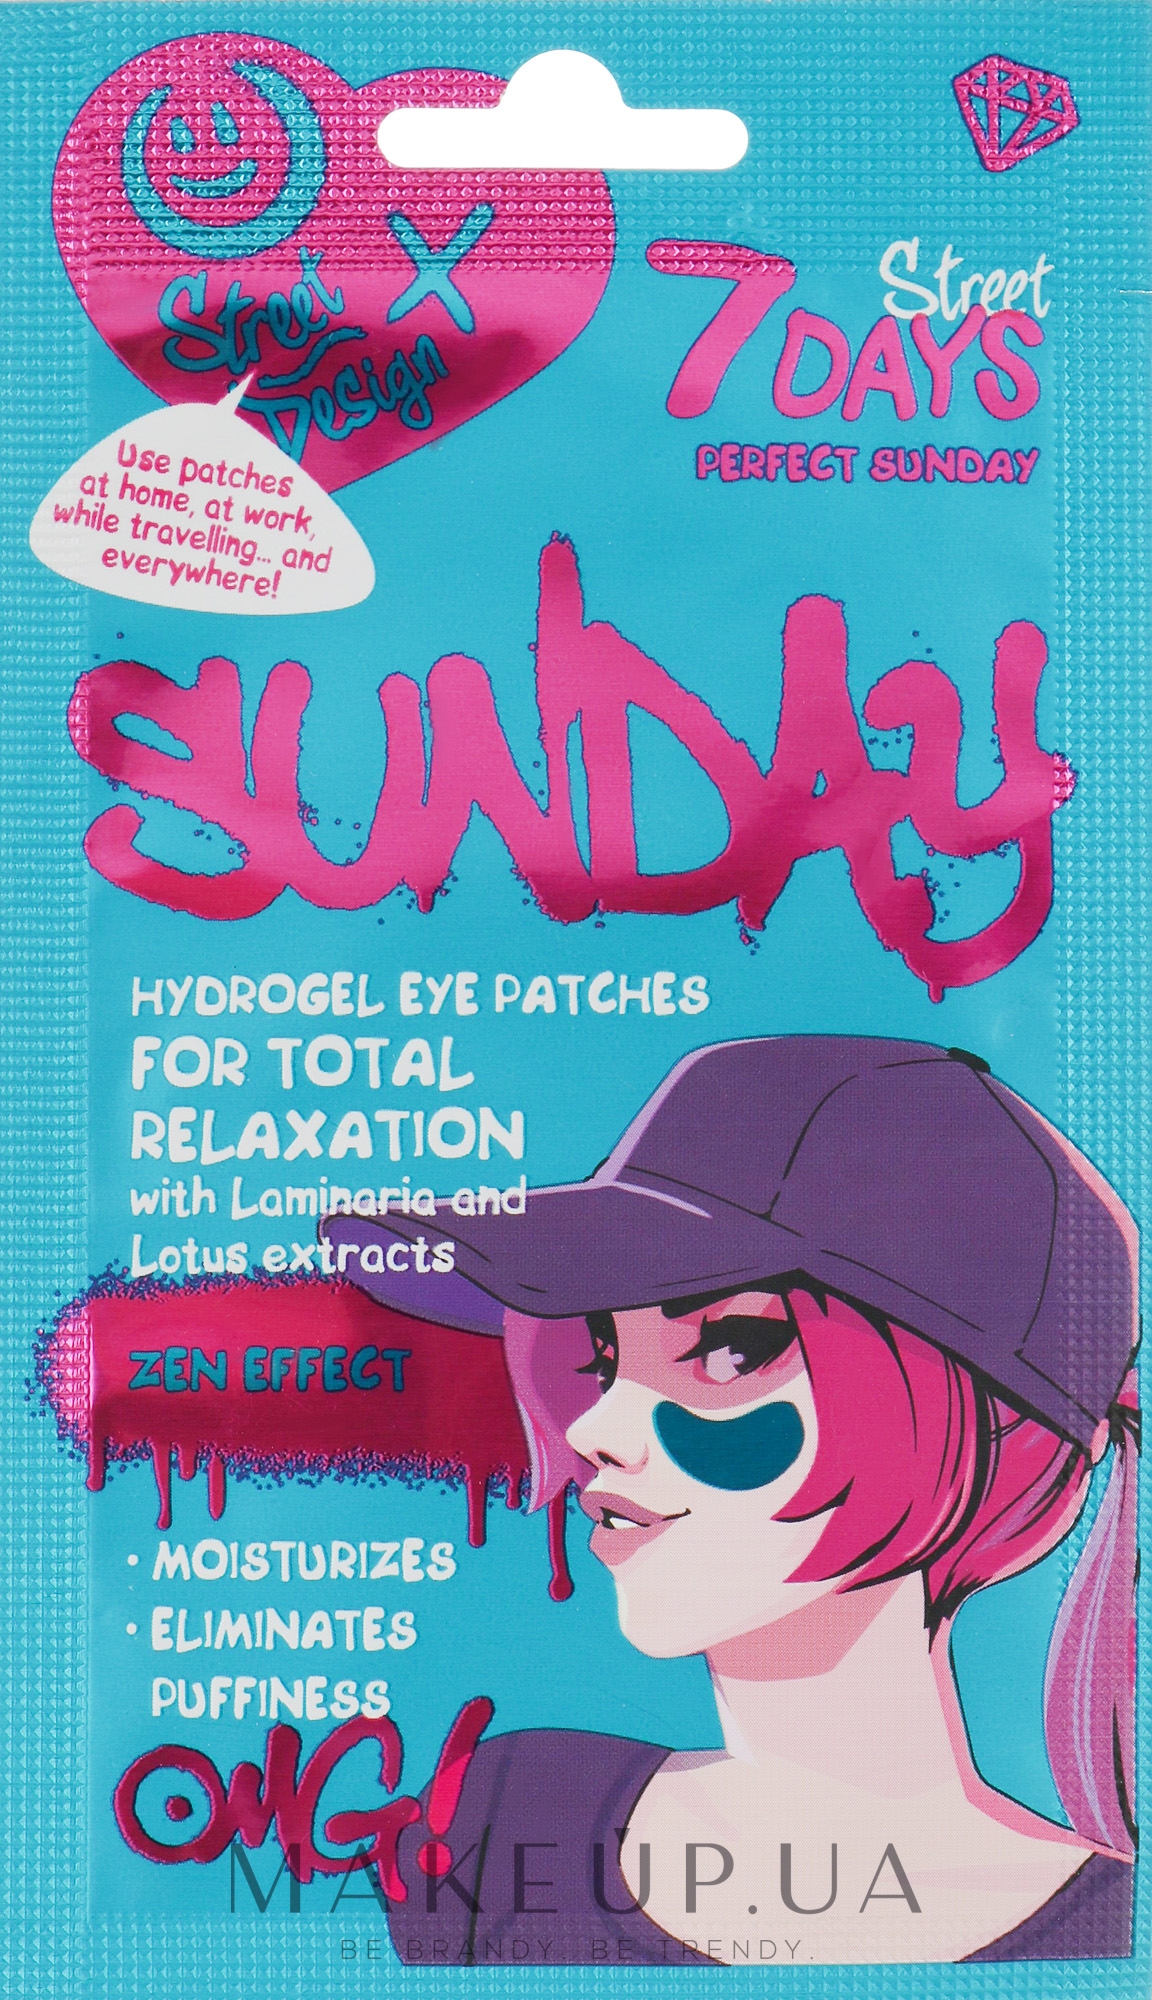 Гідрогелеві патчі для очей "Правильна неділя" з екстрактами ламінарії й лотоса - 7 Days Hydrogel Eye Patches — фото 2.5g